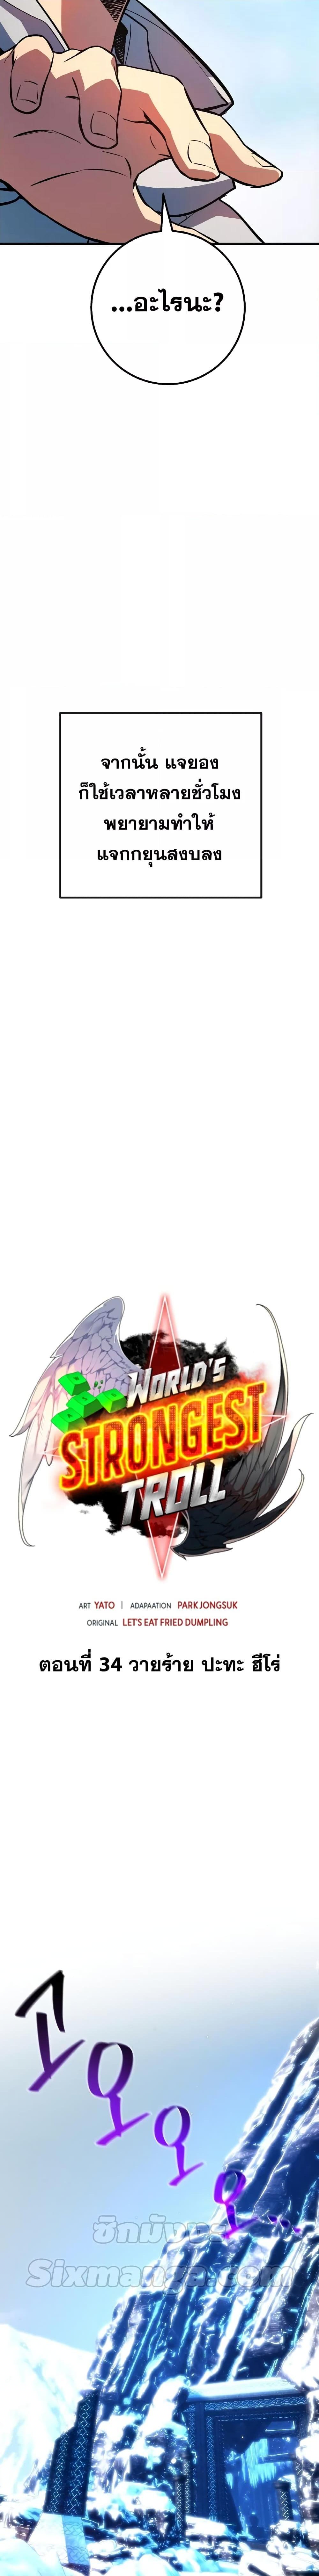 World’s Strongest Troll 34 07